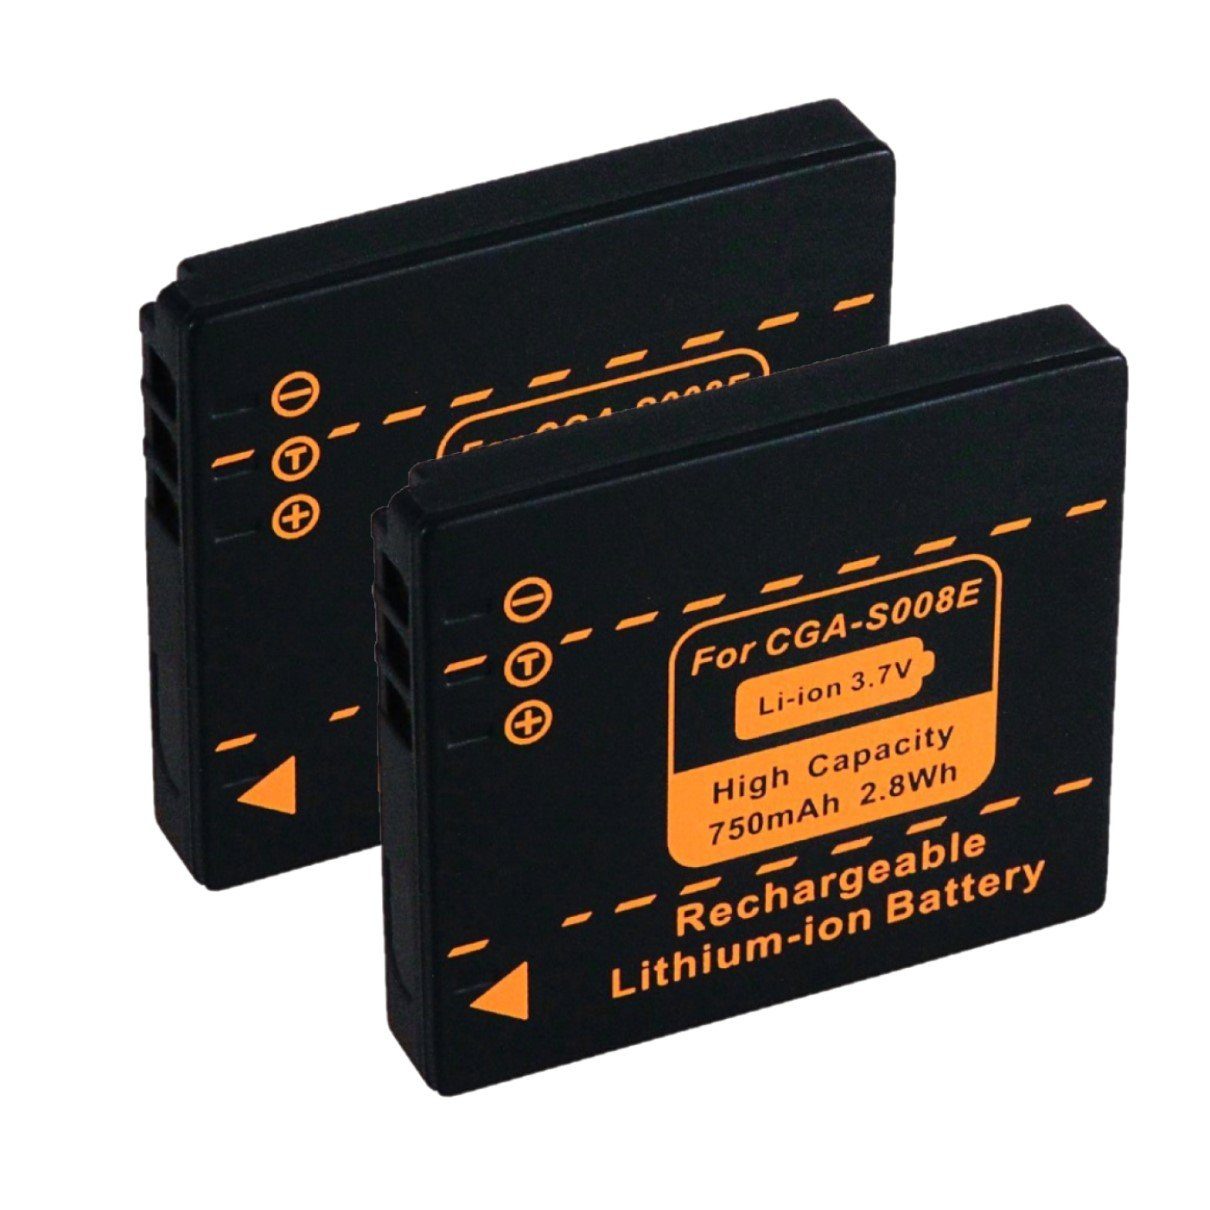 GOLDBATT 2x Akku für Panasonic DMC-FX30 FX-30 CGA-S008E DMW-BCE10E DMC-FS20 Kamera-Akku Ersatzakku 750 mAh (3,7 V, 2 St), 100% kompatibel mit den Original Akkus durch maßgefertigte Passform inklusive Überhitzungsschutz